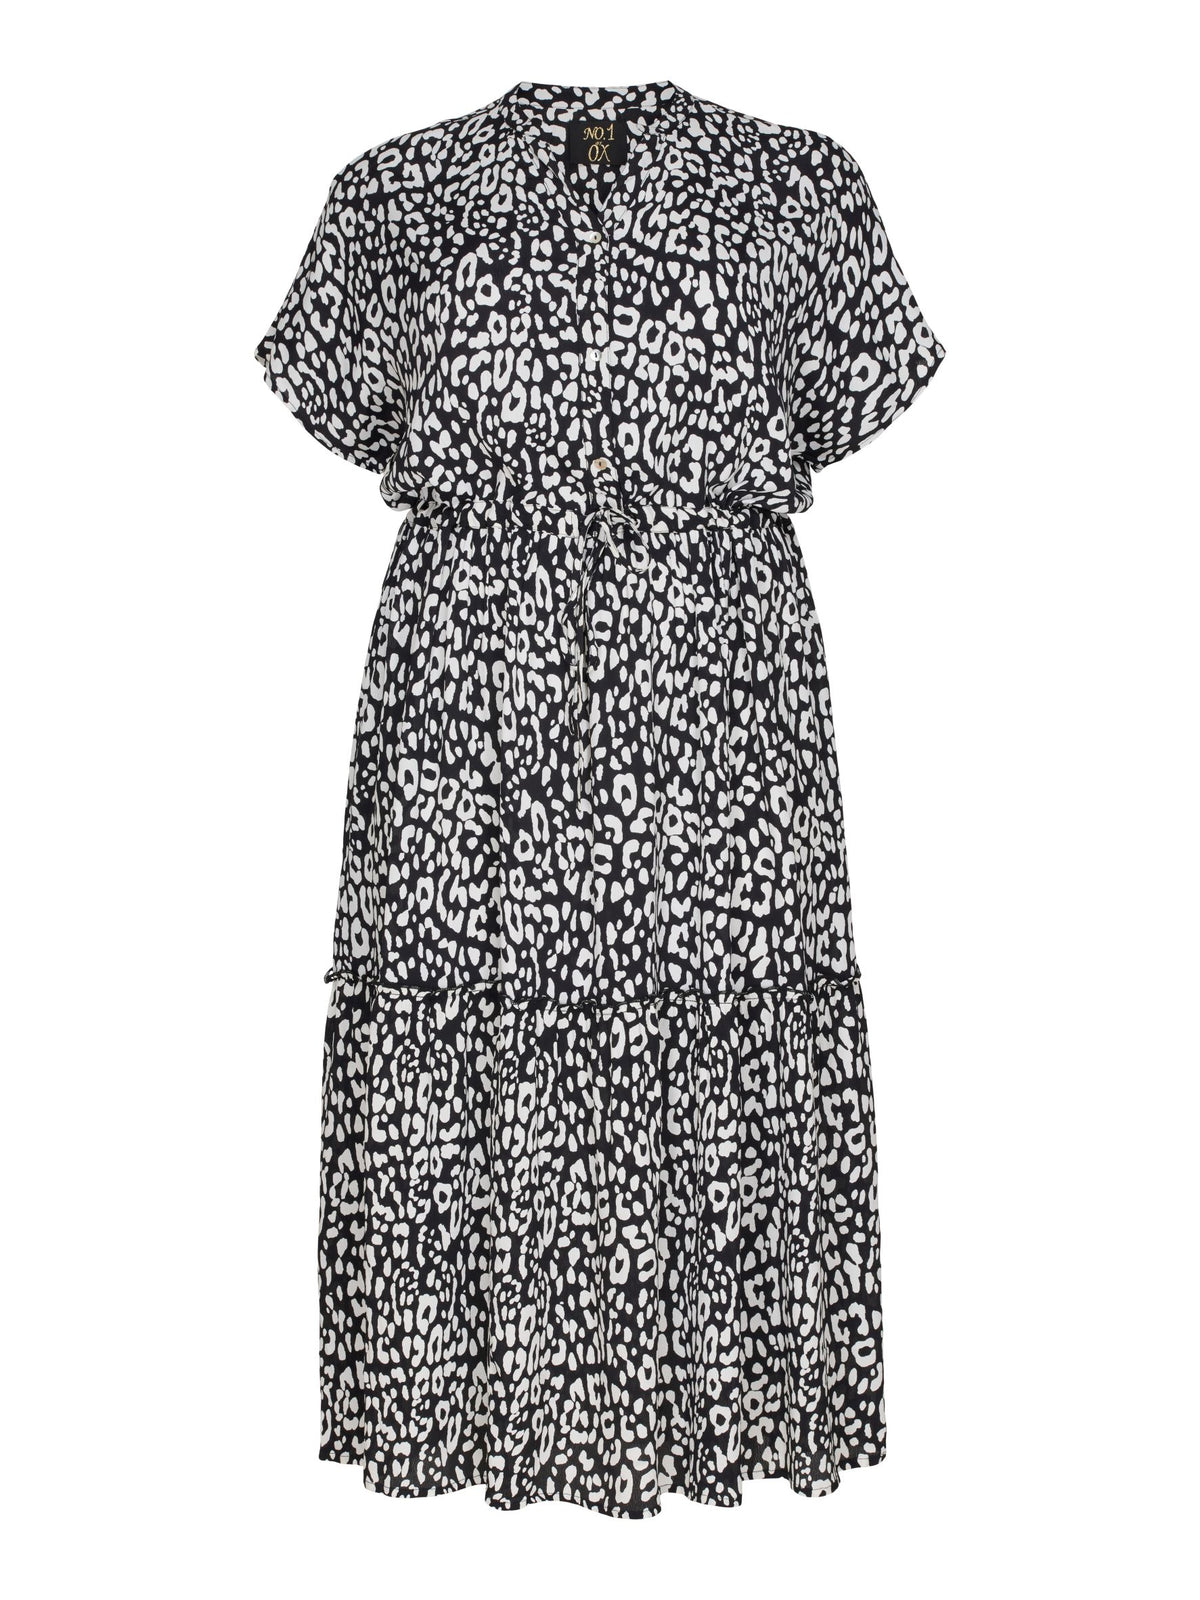 NO. 1 BY OX Lang kjole med snøre i taljen Kjoler Sort